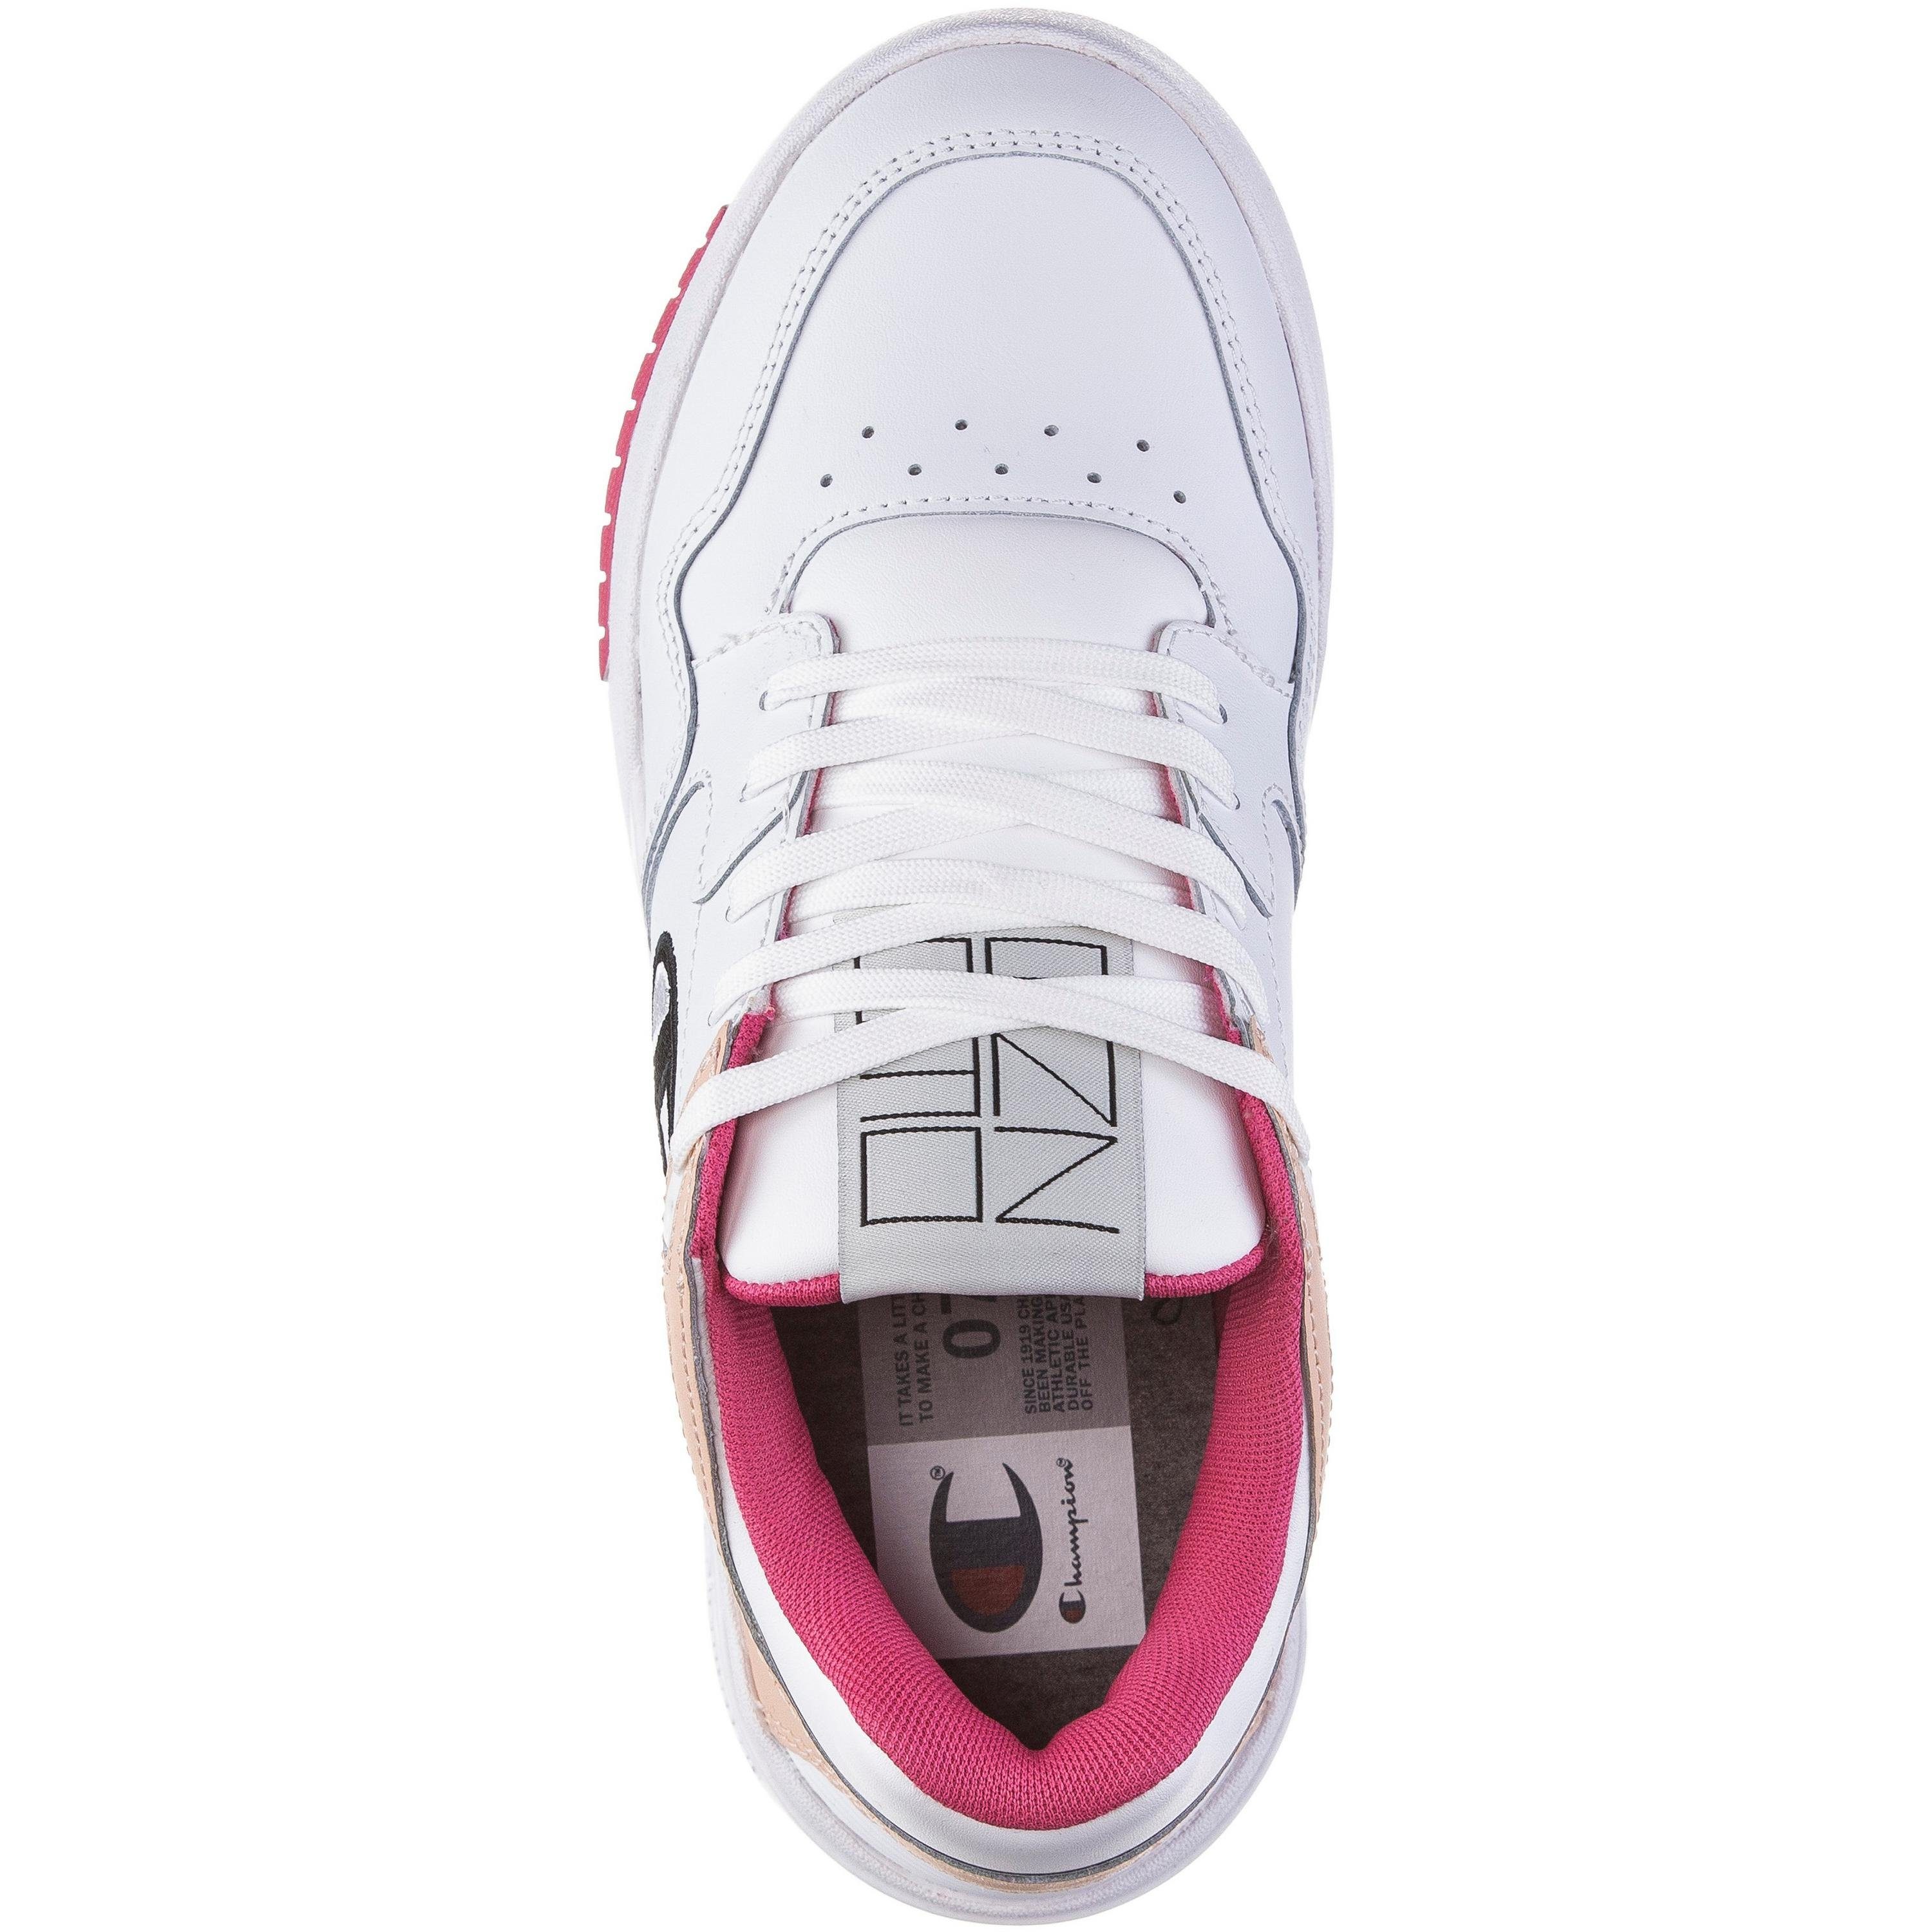 Rochester Z80 beauty-pink white-black Sneaker Champion